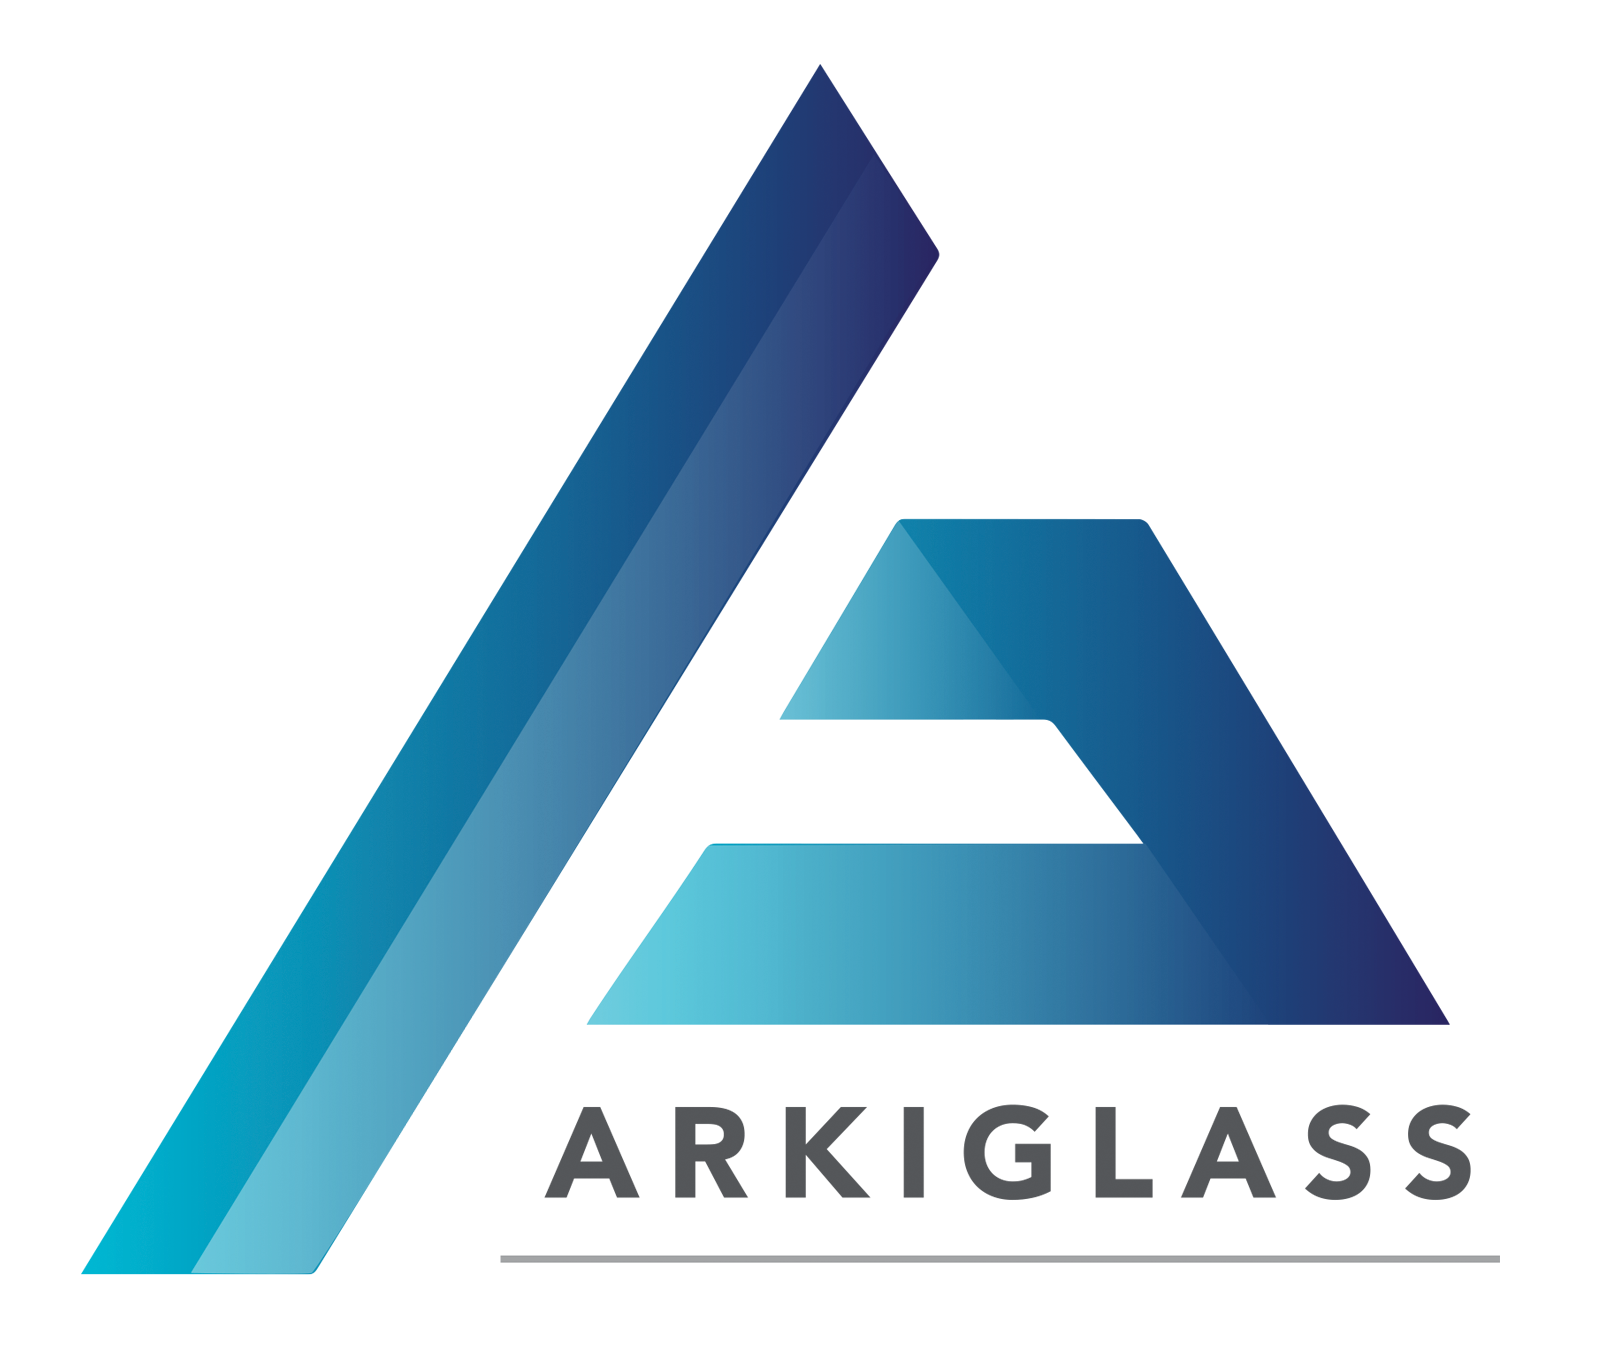 arkiglass_logo_2017